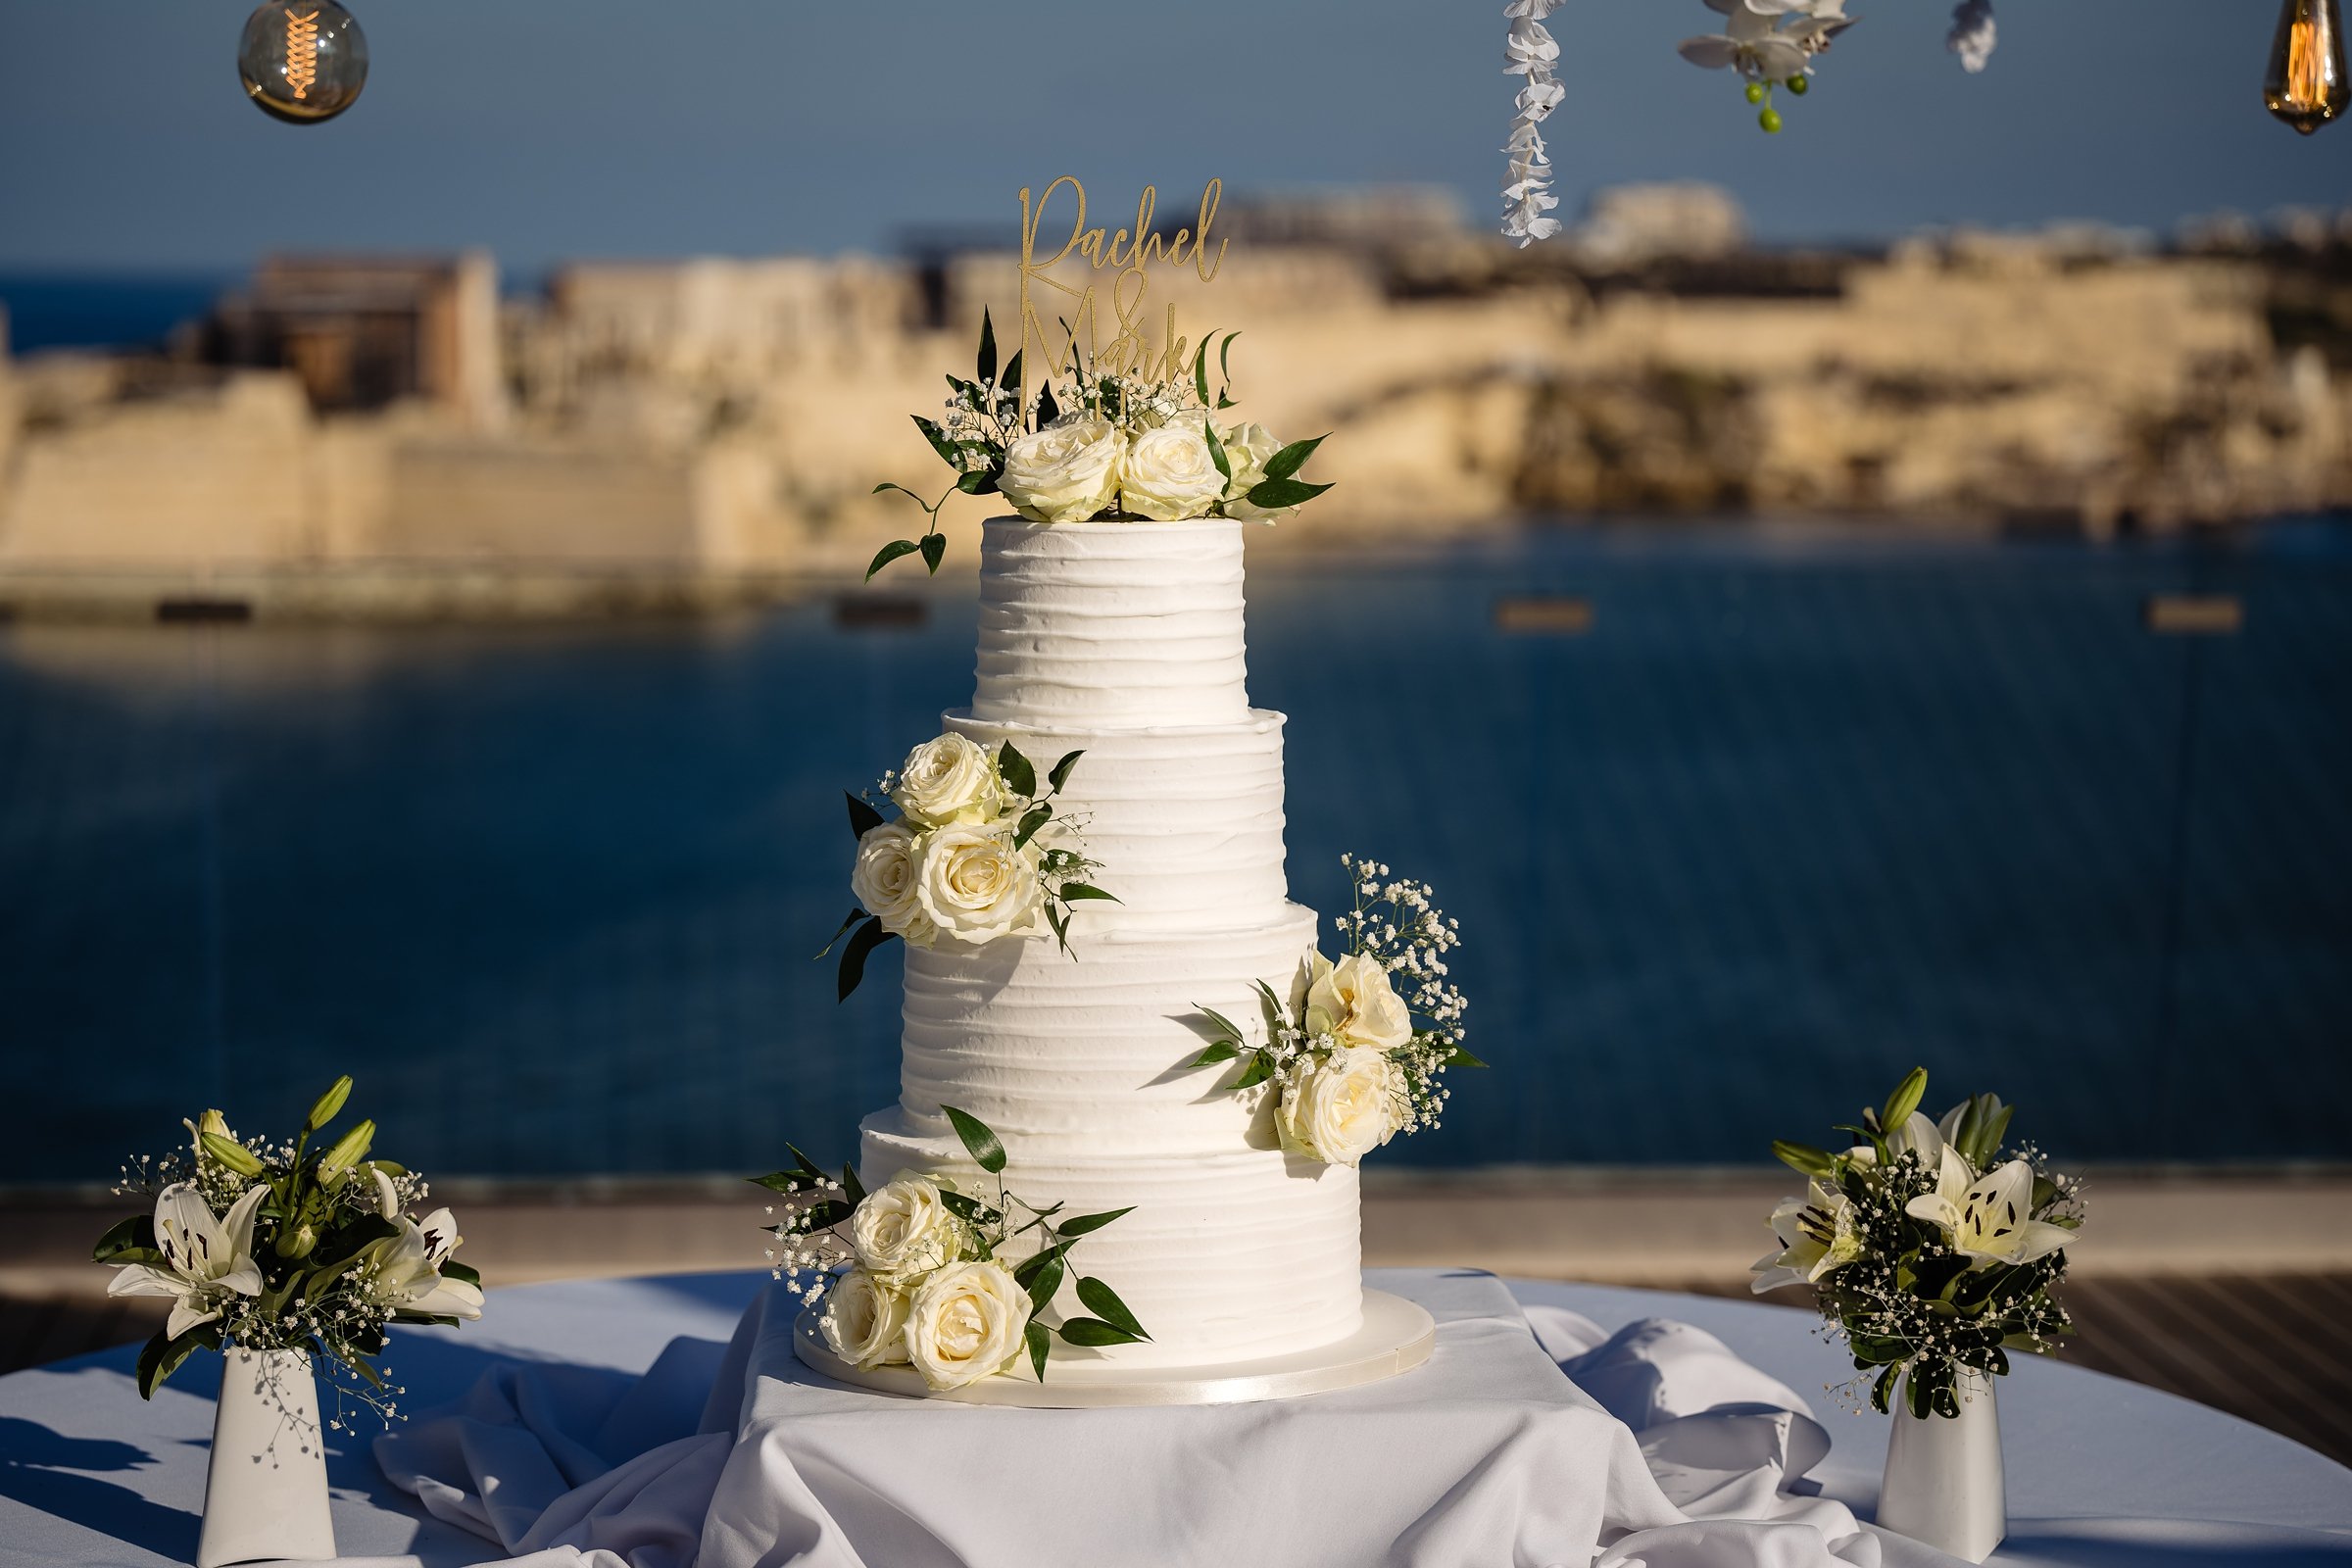 Rachel & Mark's Wedding at the MCC Valletta_0051.jpg